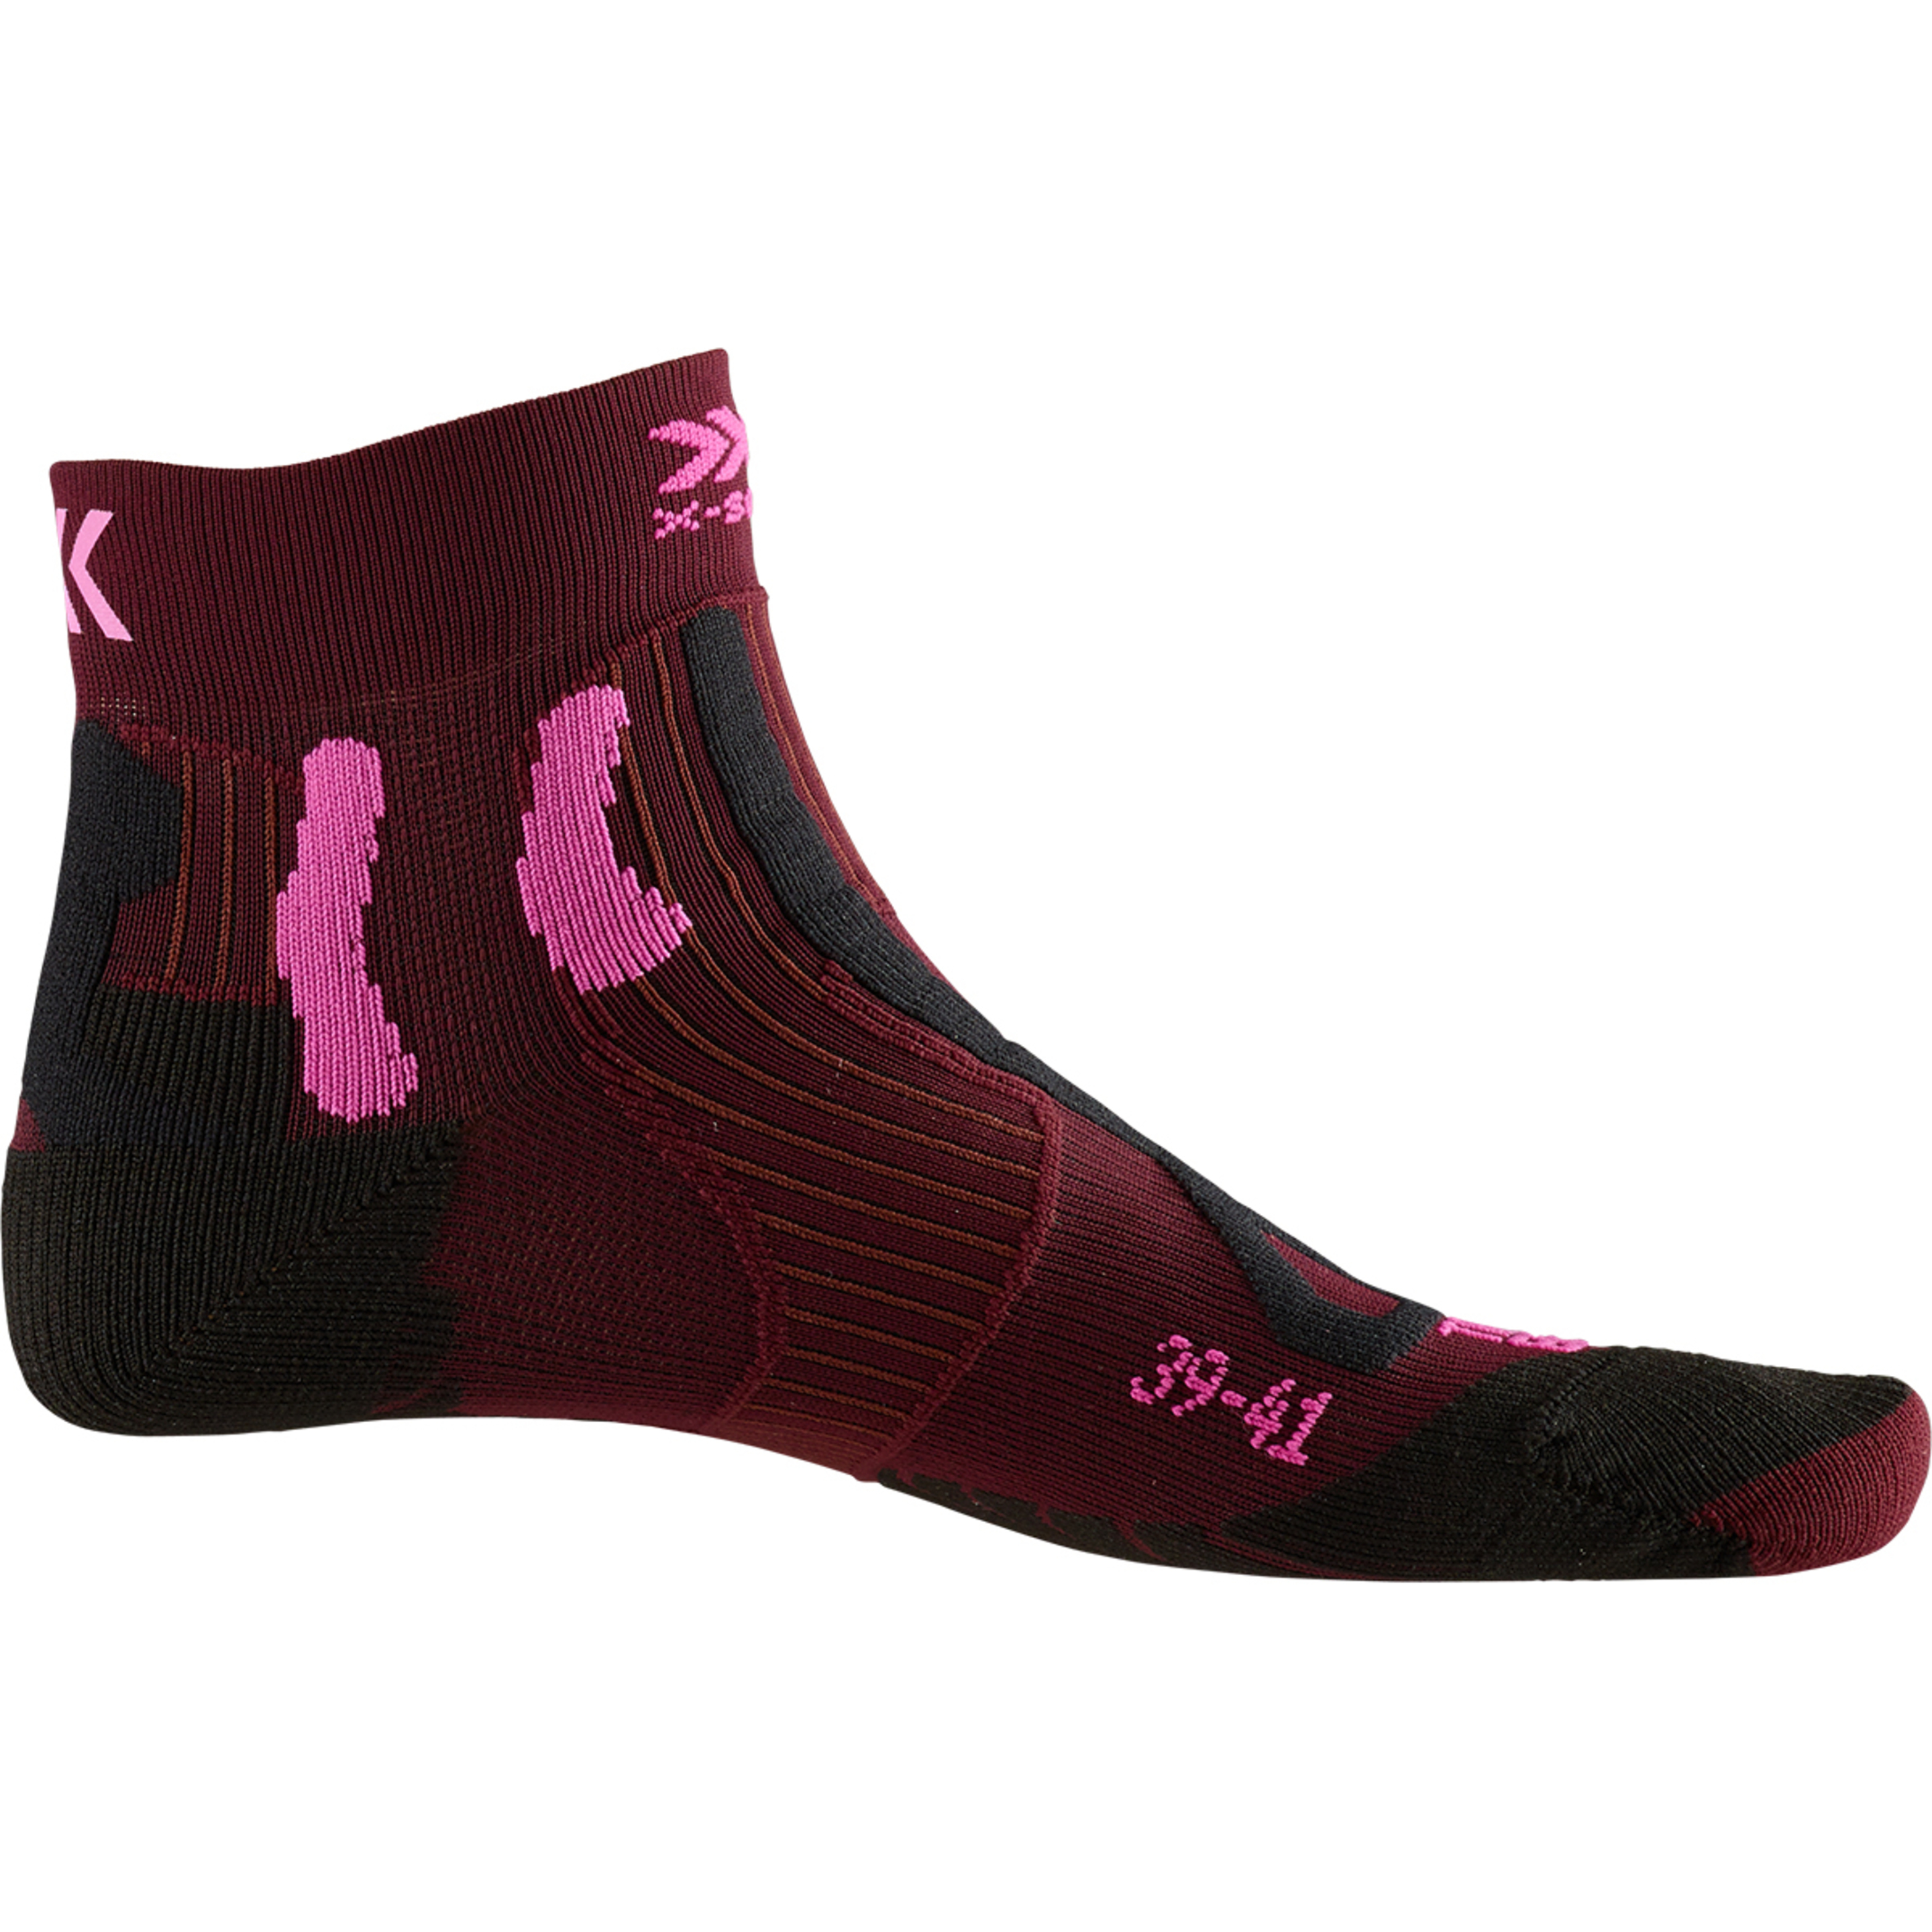 Calcetin Trail Run Energy Mujer  X-socks - Rojo  MKP